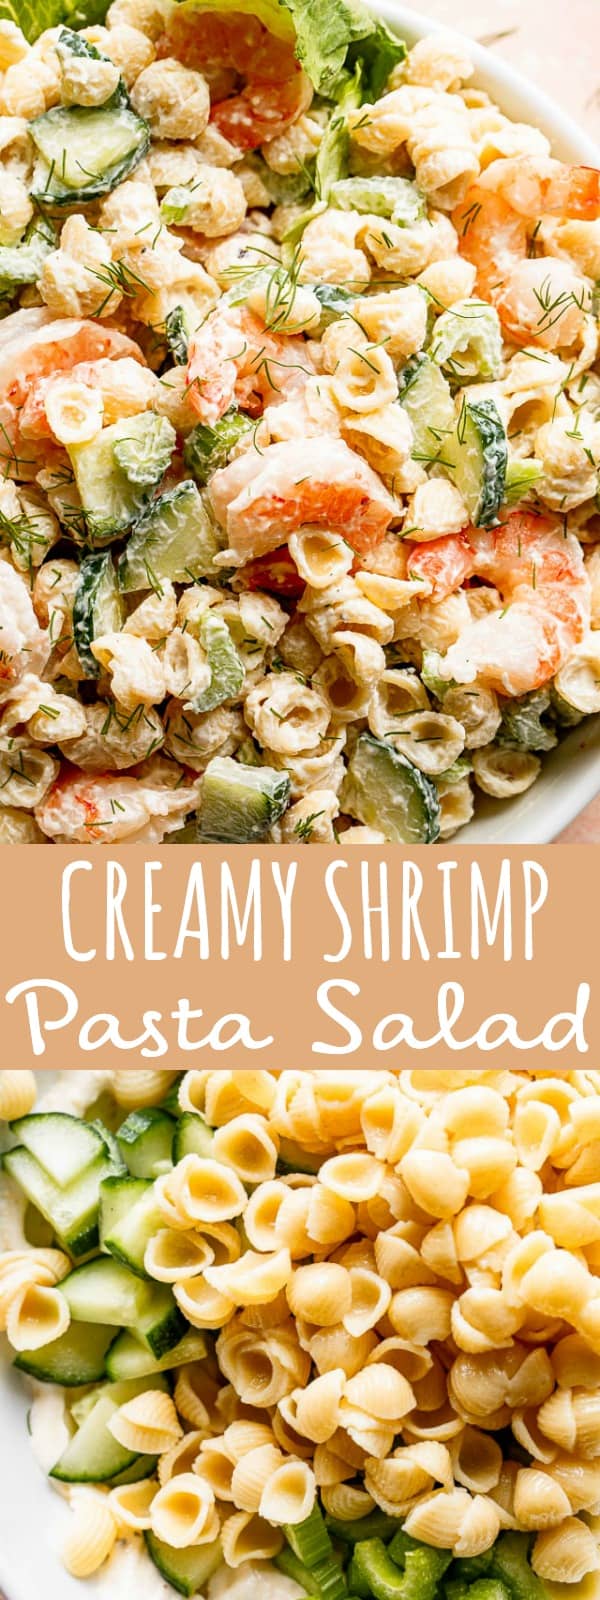 Creamy Shrimp Pasta Salad Recipe | How to Make the Best Pasta Salad